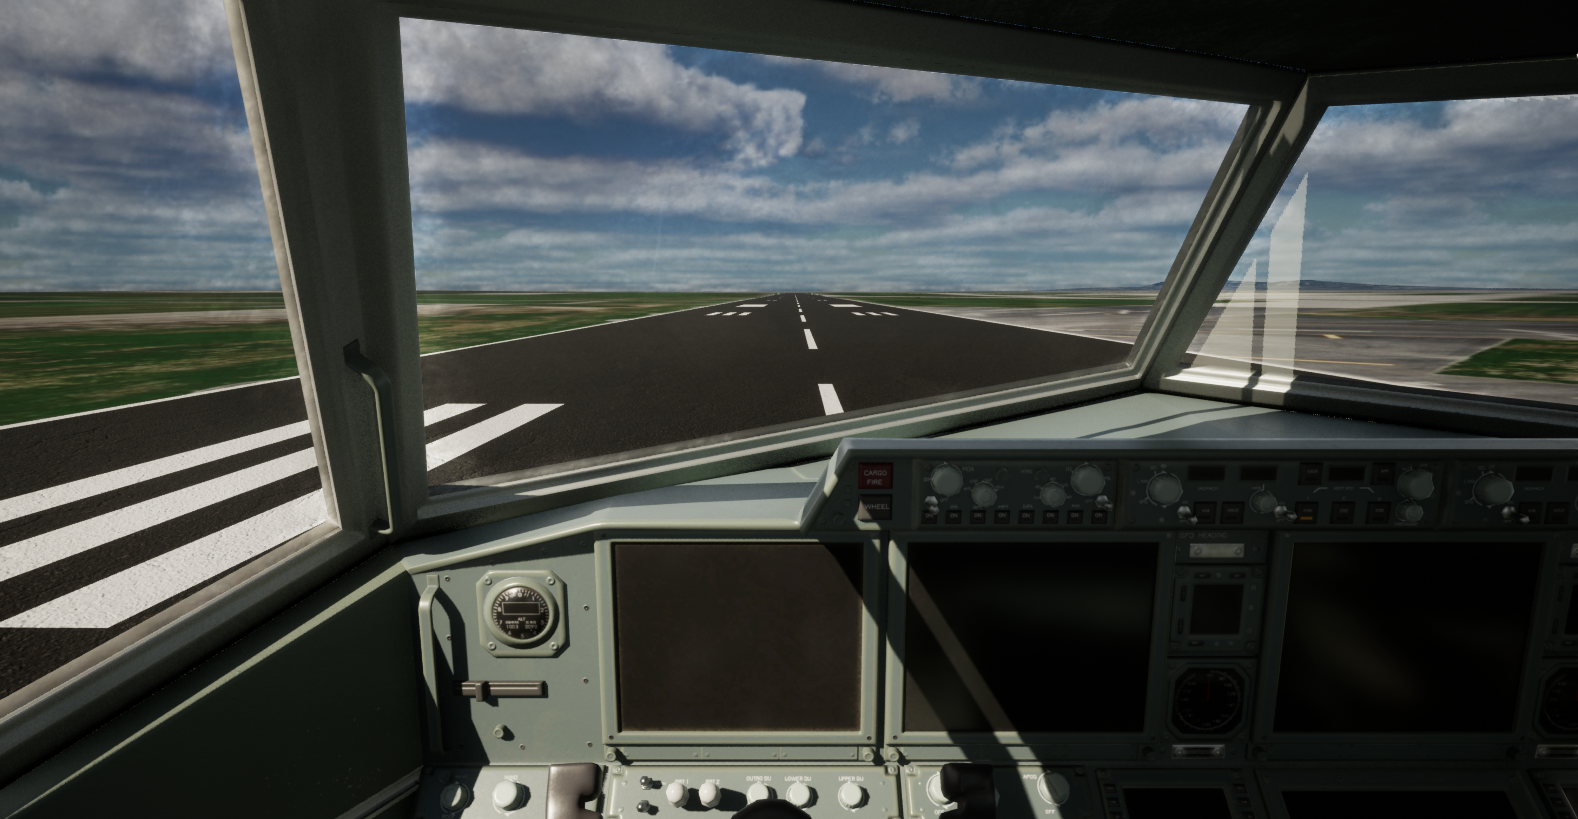 Package reorder tool - how to use it - Menus & Activities - Microsoft  Flight Simulator Forums